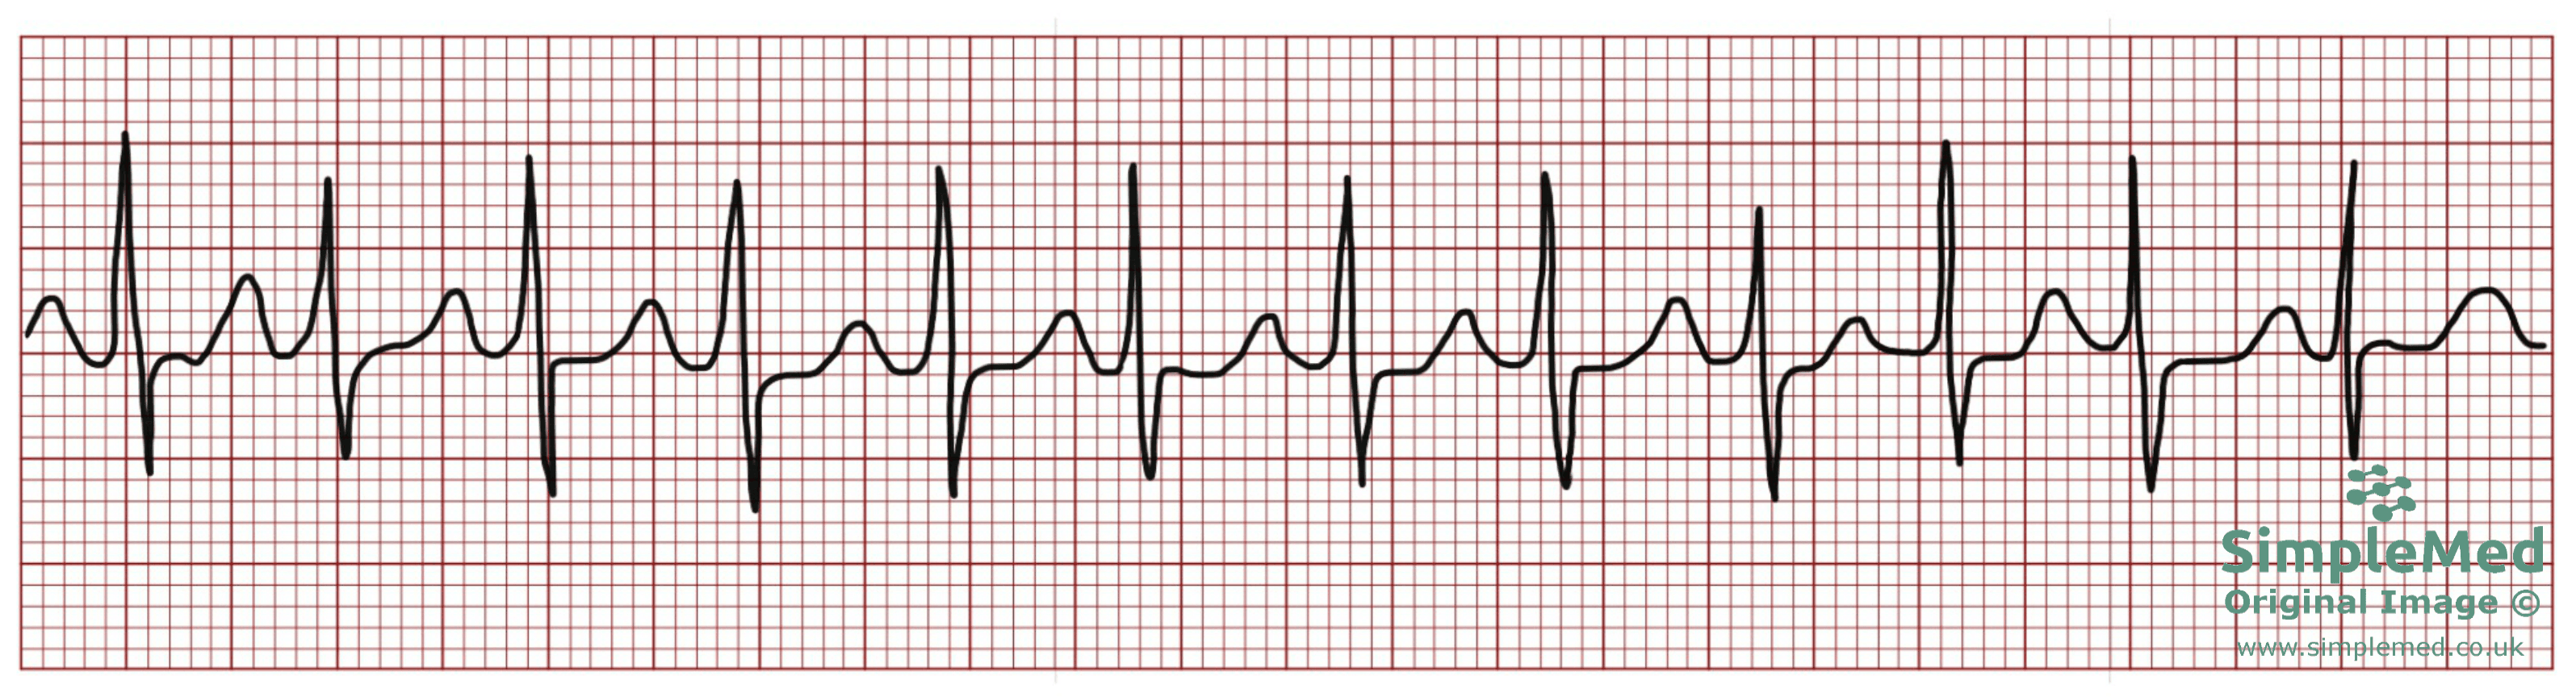 Atrial Tachycardia ECG electrocardiogram pathology SimpleMed